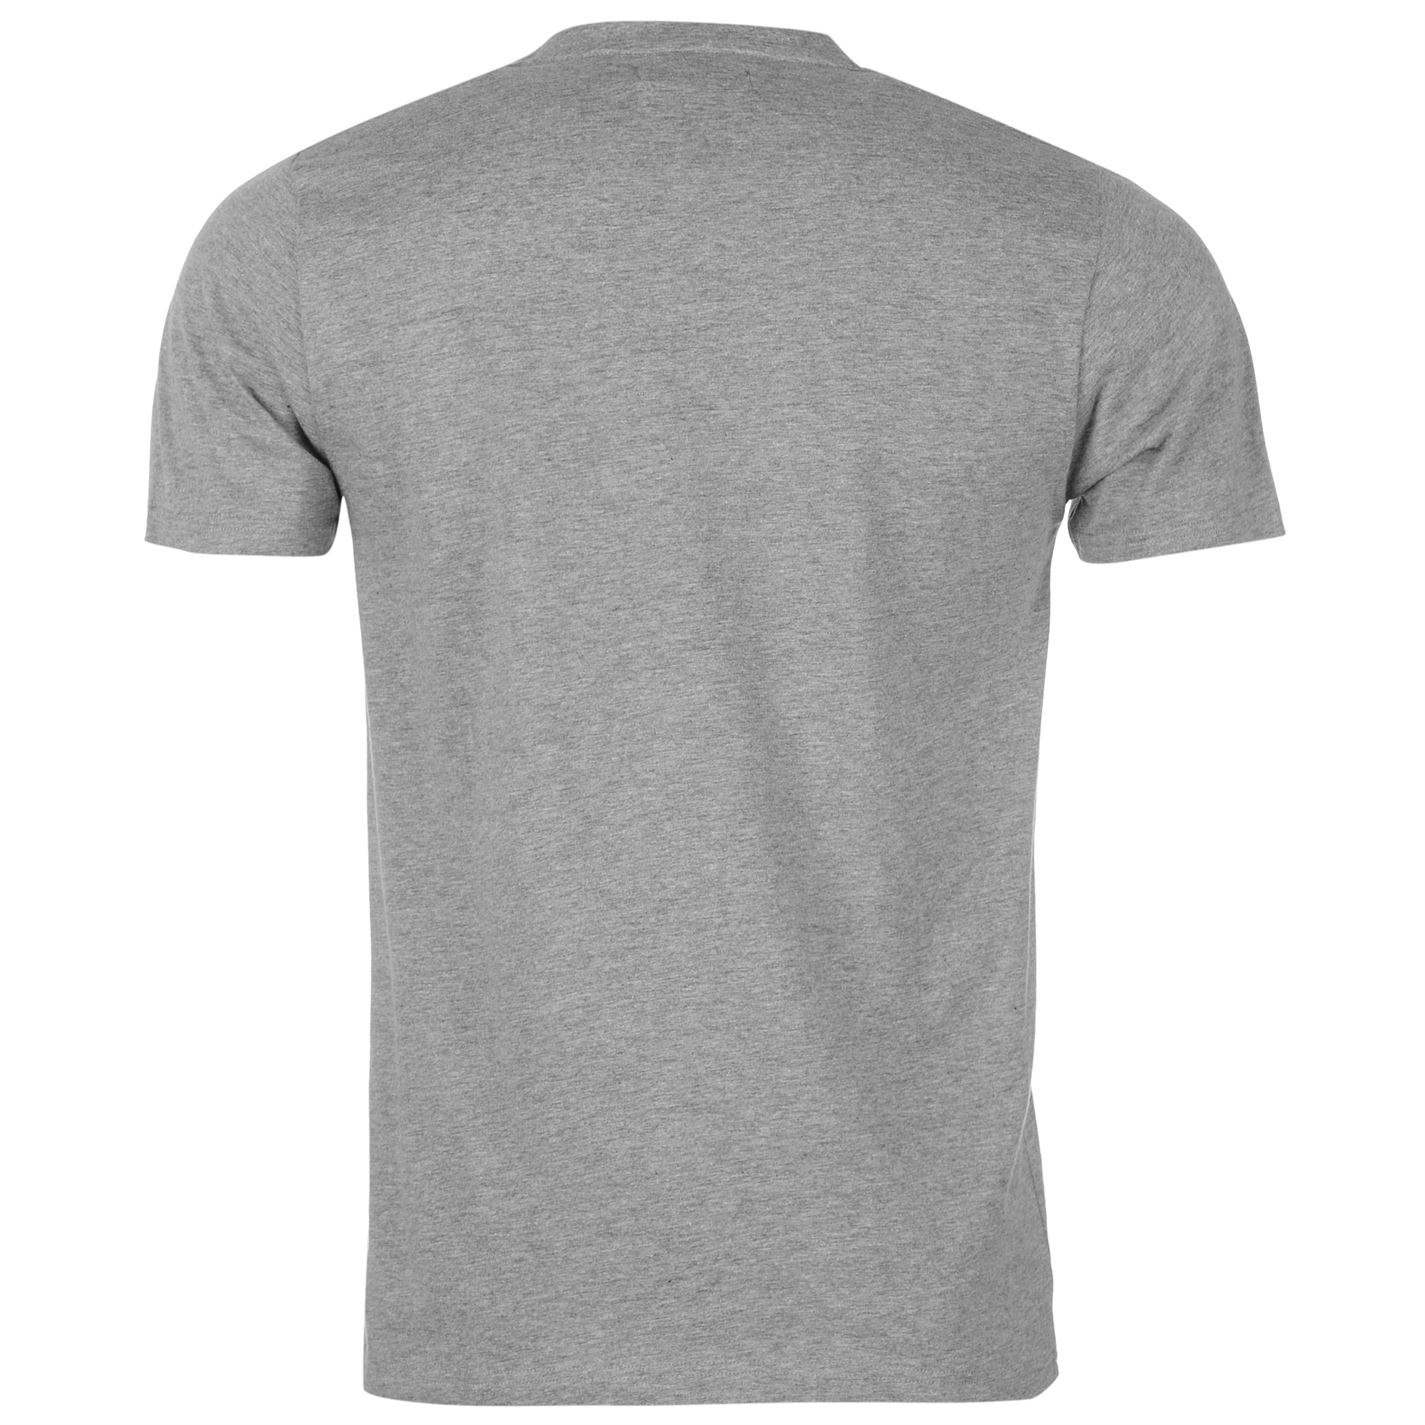 Pierre Cardin Gents Mens V-Neck T-Shirt Short Sleeve Tee Top | eBay